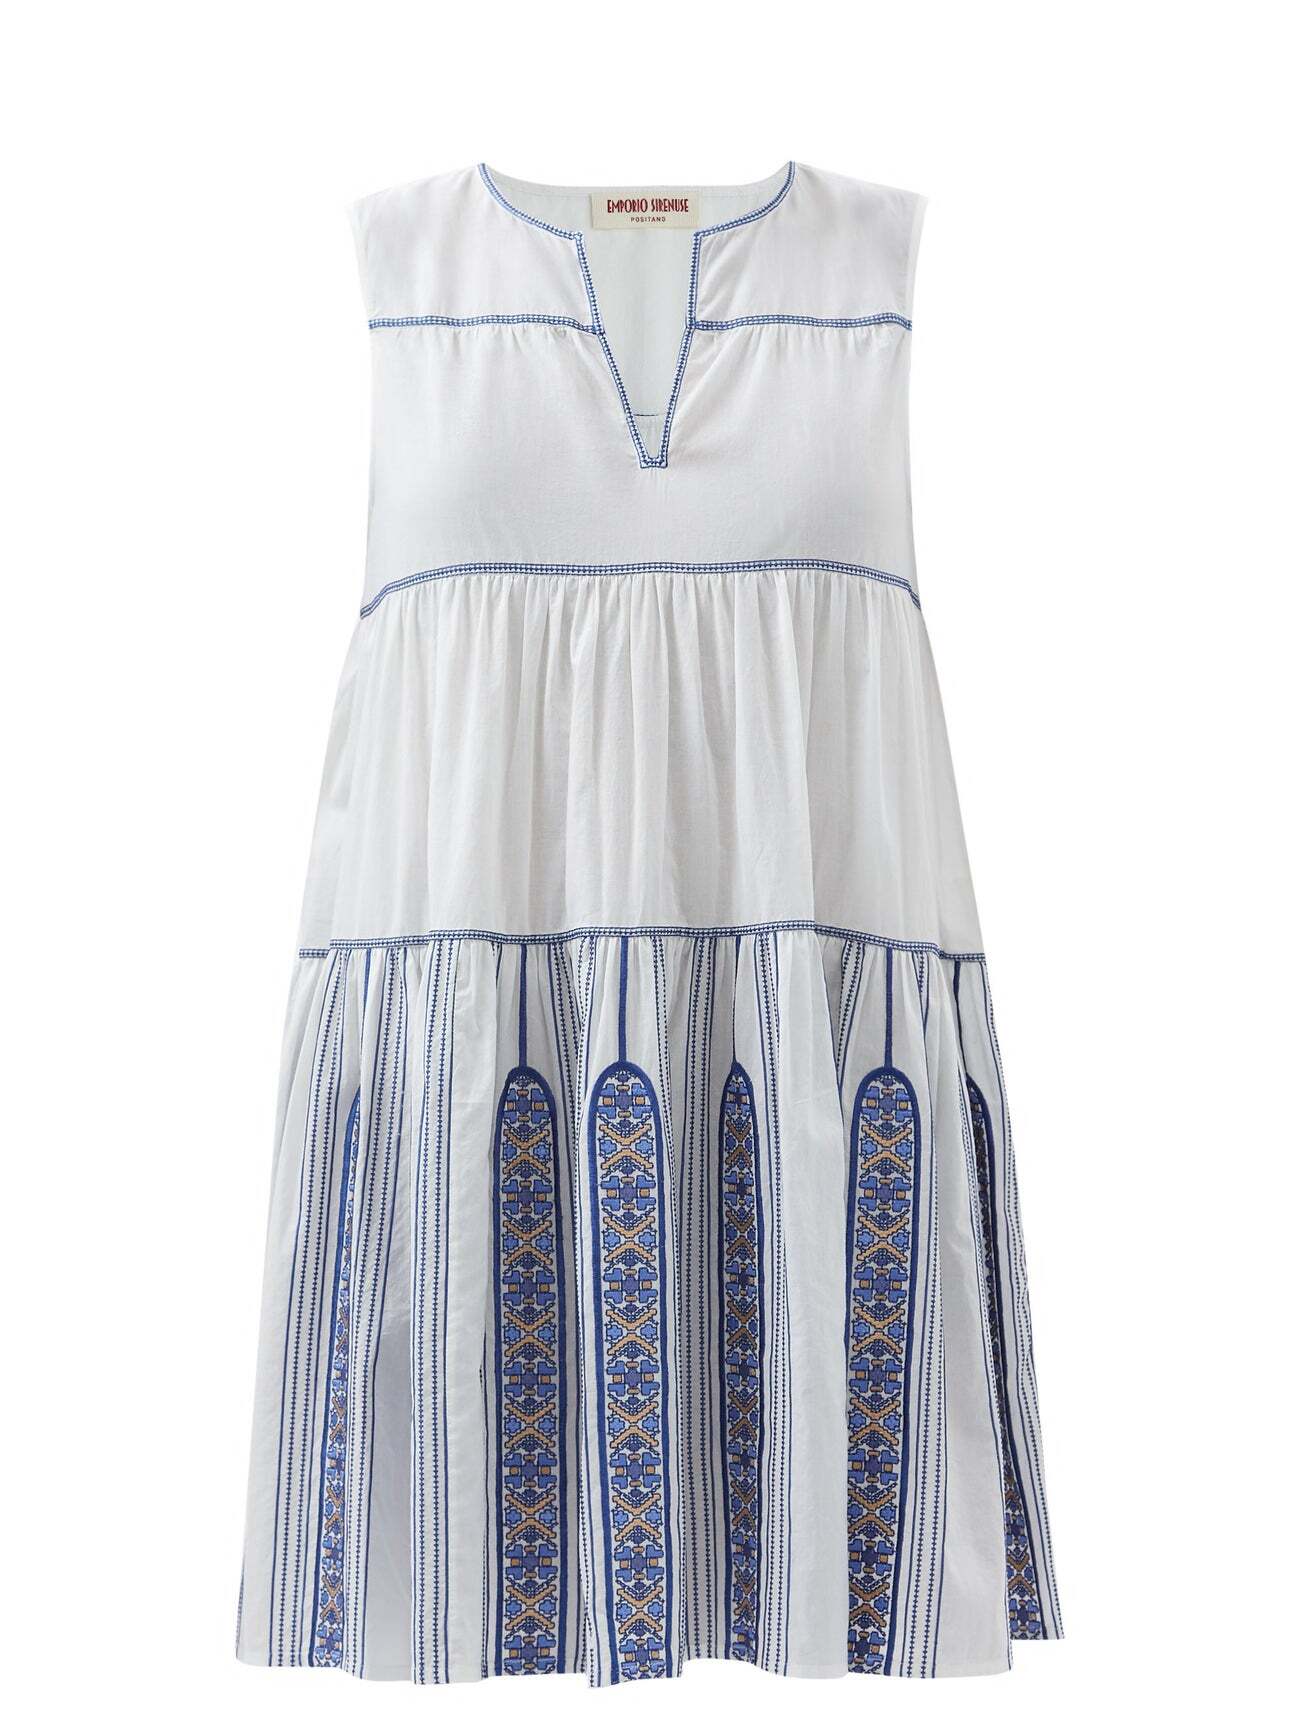 Emporio Sirenuse - Thelma Embroidered Cotton-voile Mini Dress - Womens - White Blue